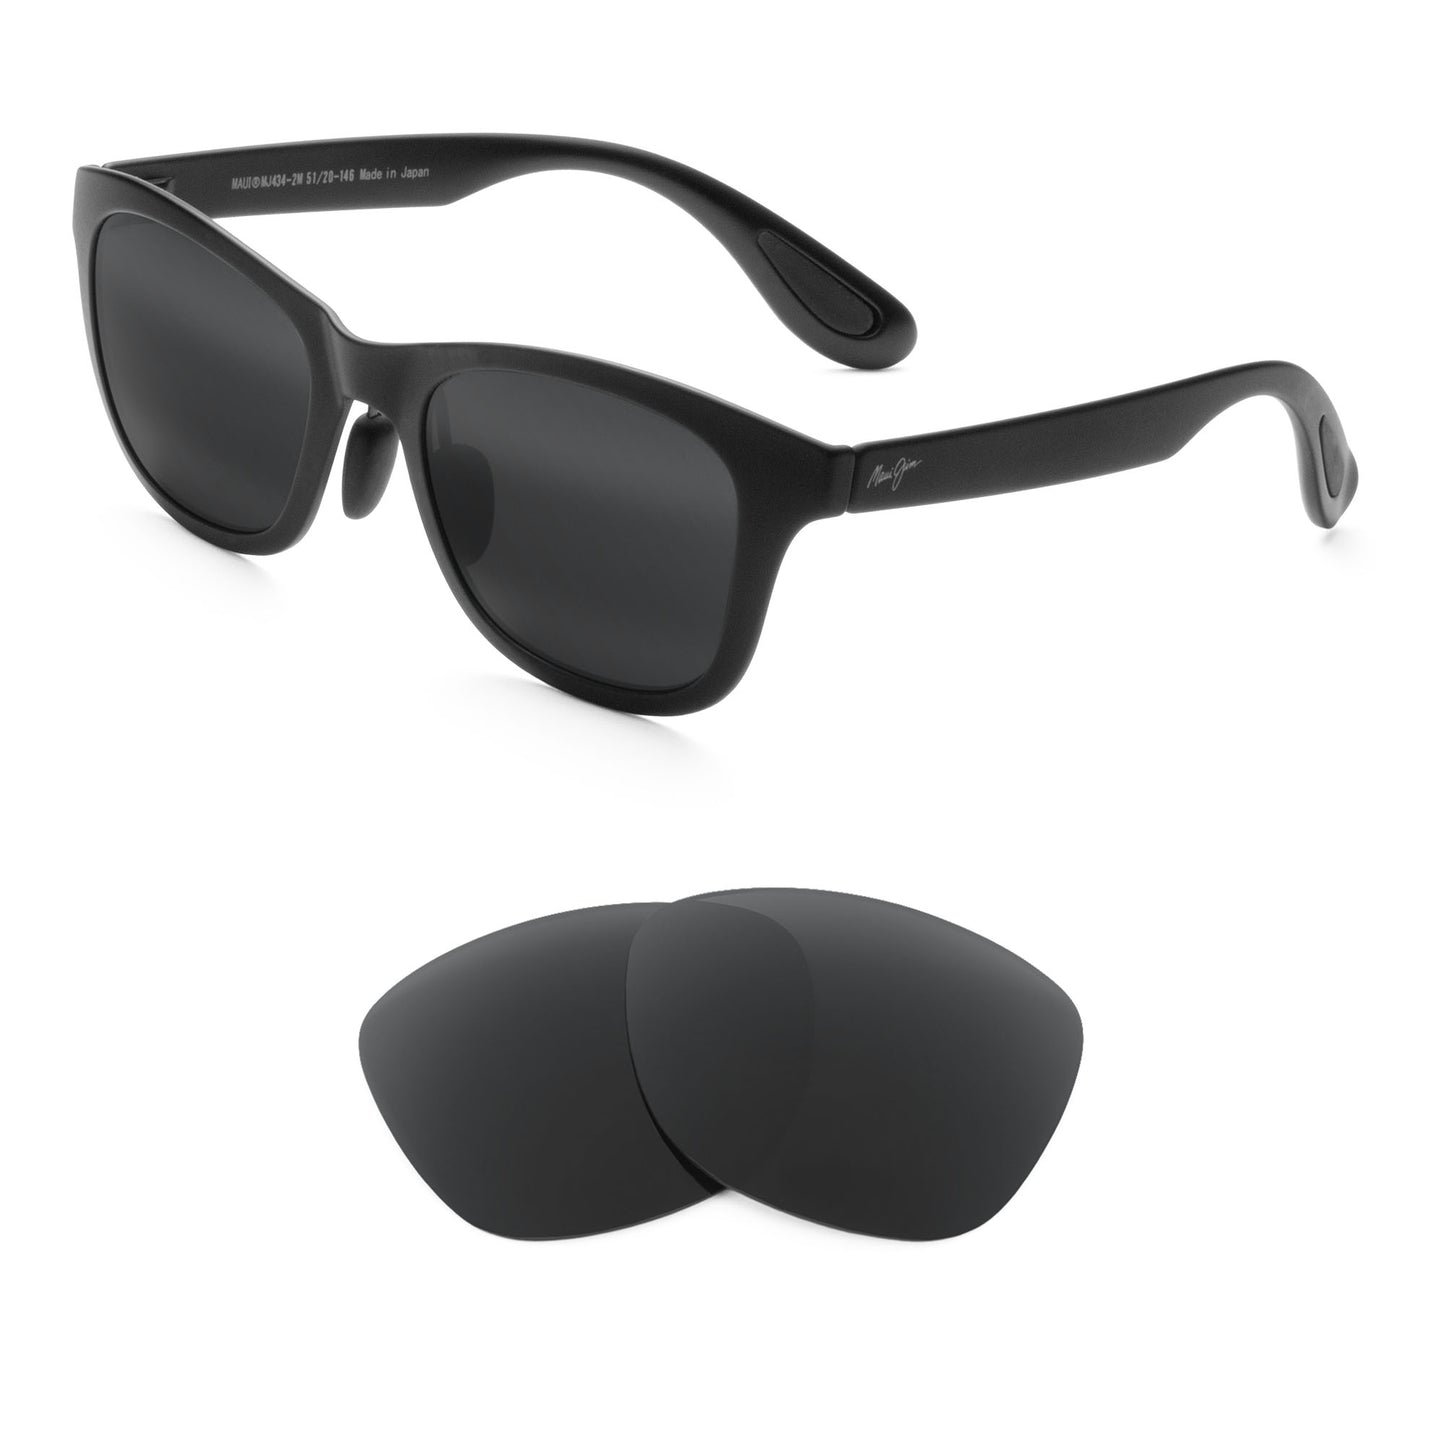 Maui Jim Hana Bay MJ434 sunglasses with replacement lenses